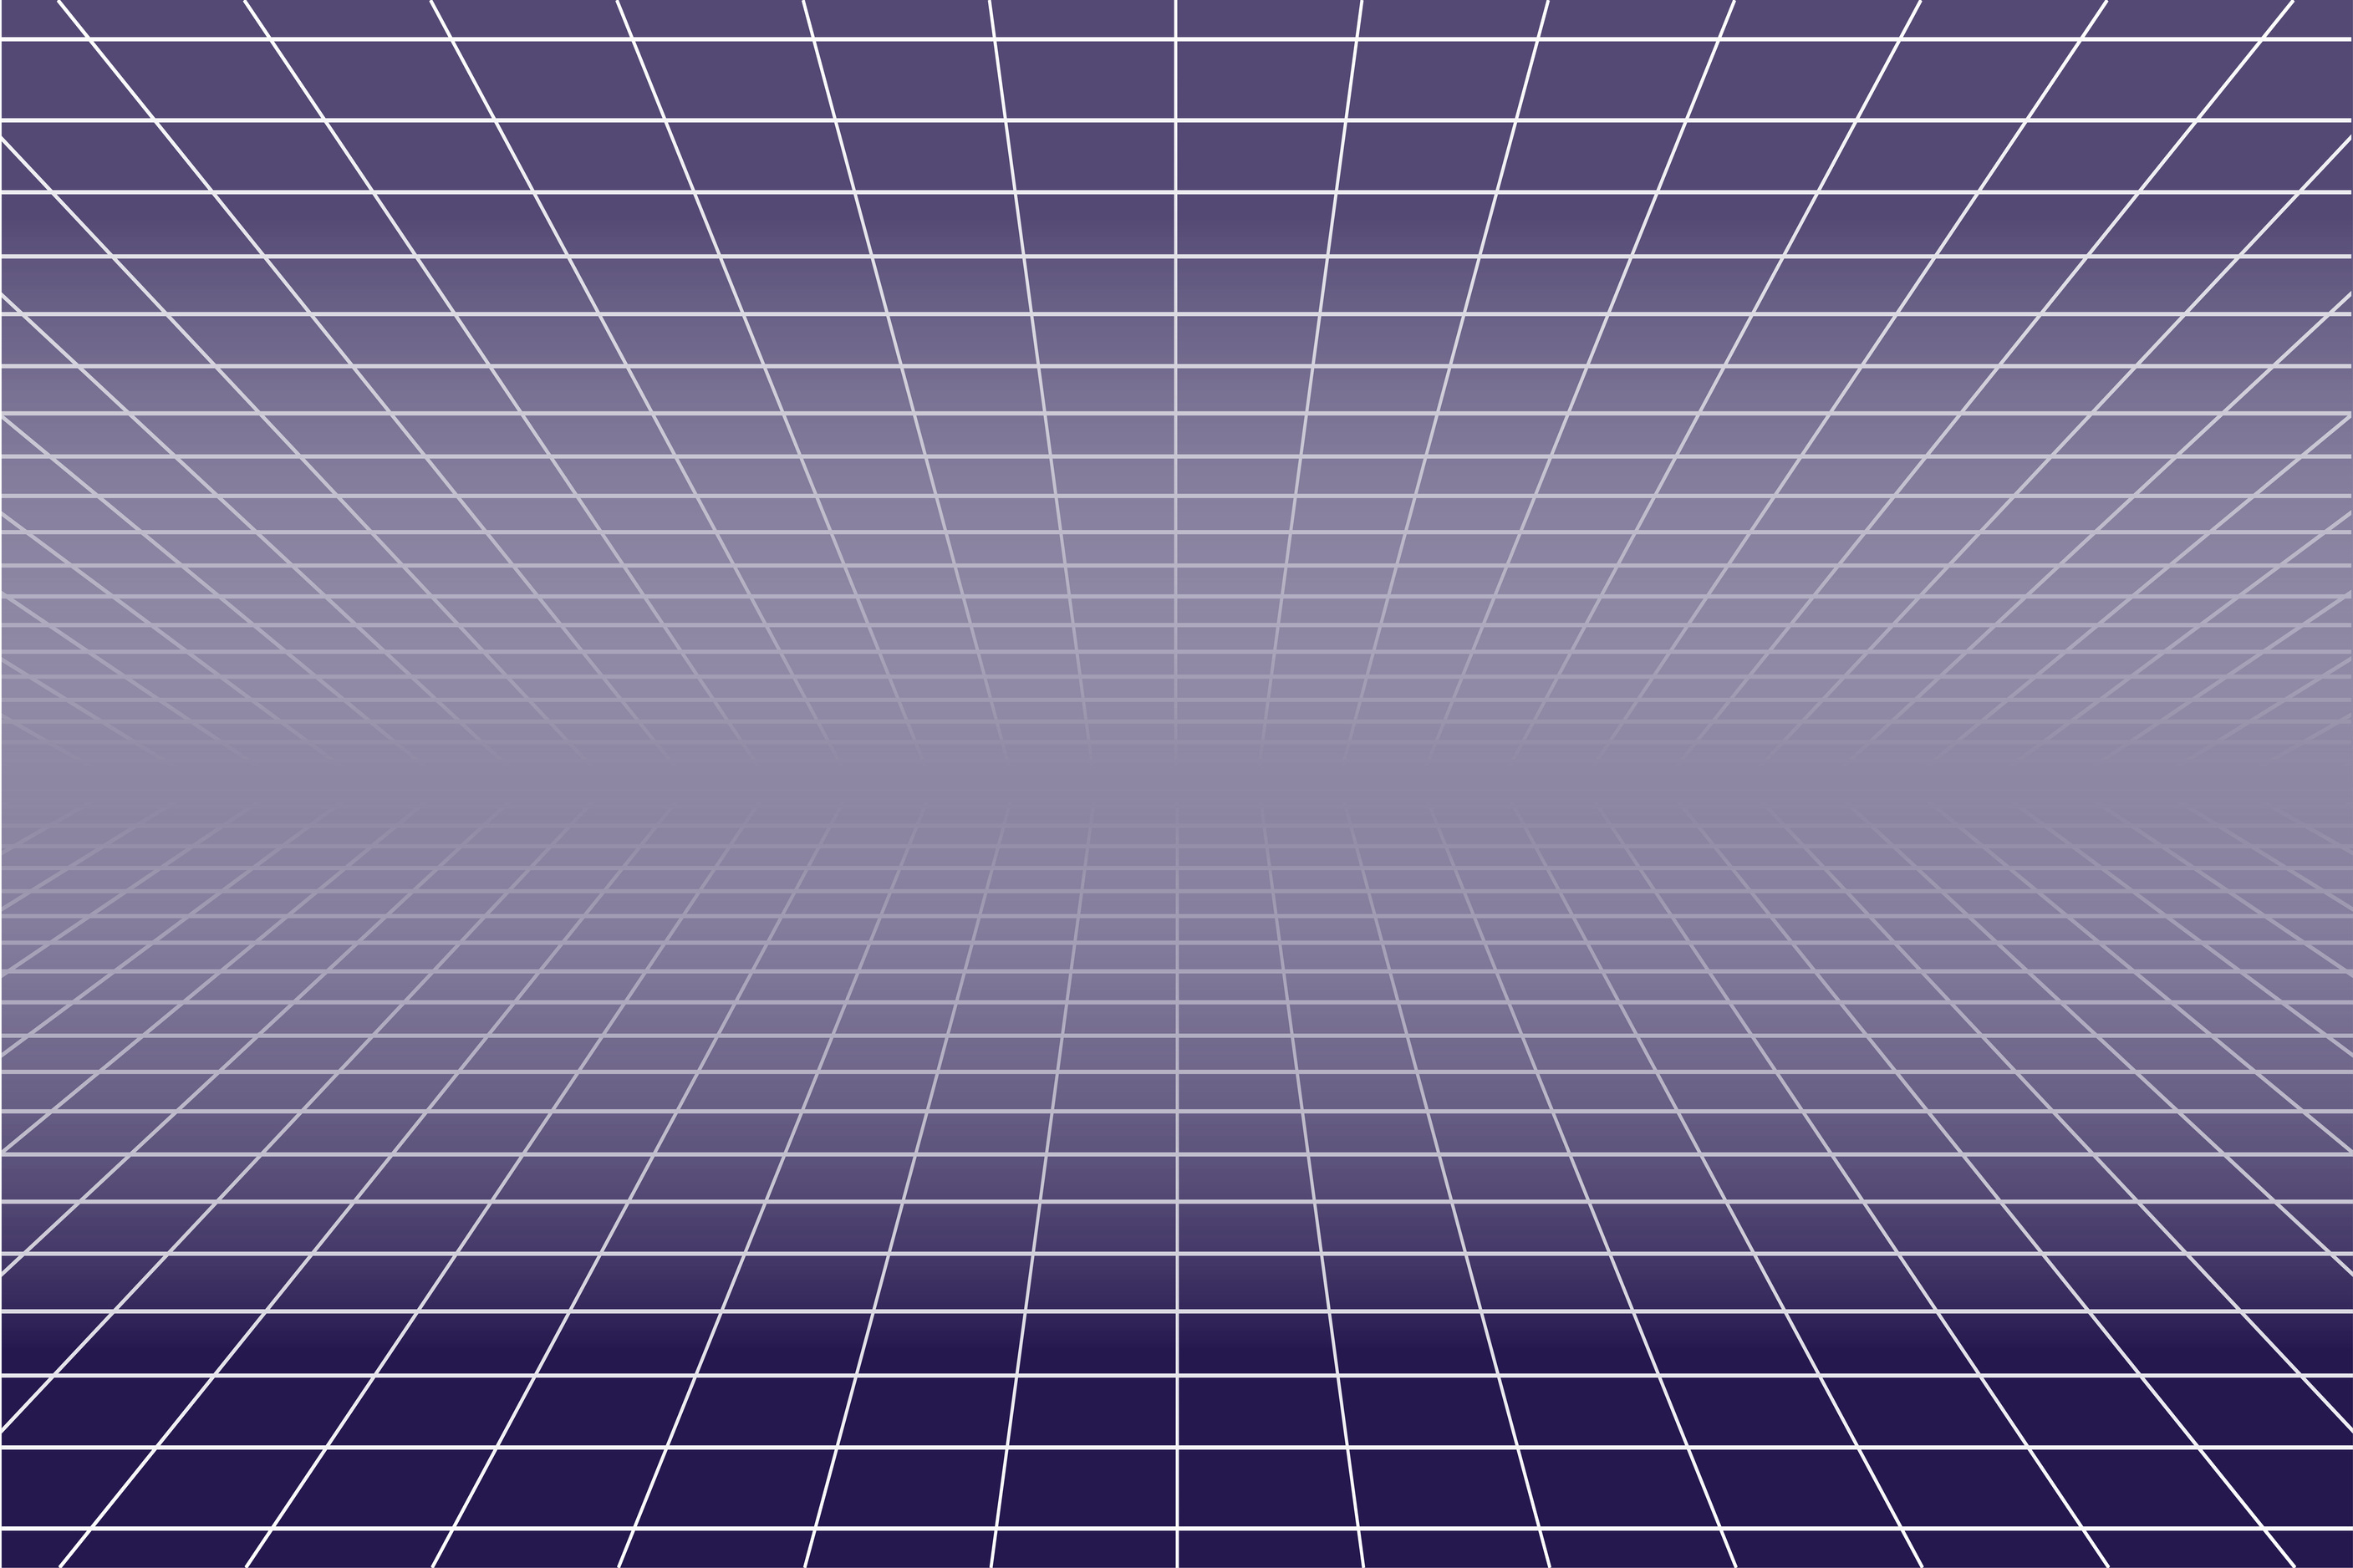 grid background